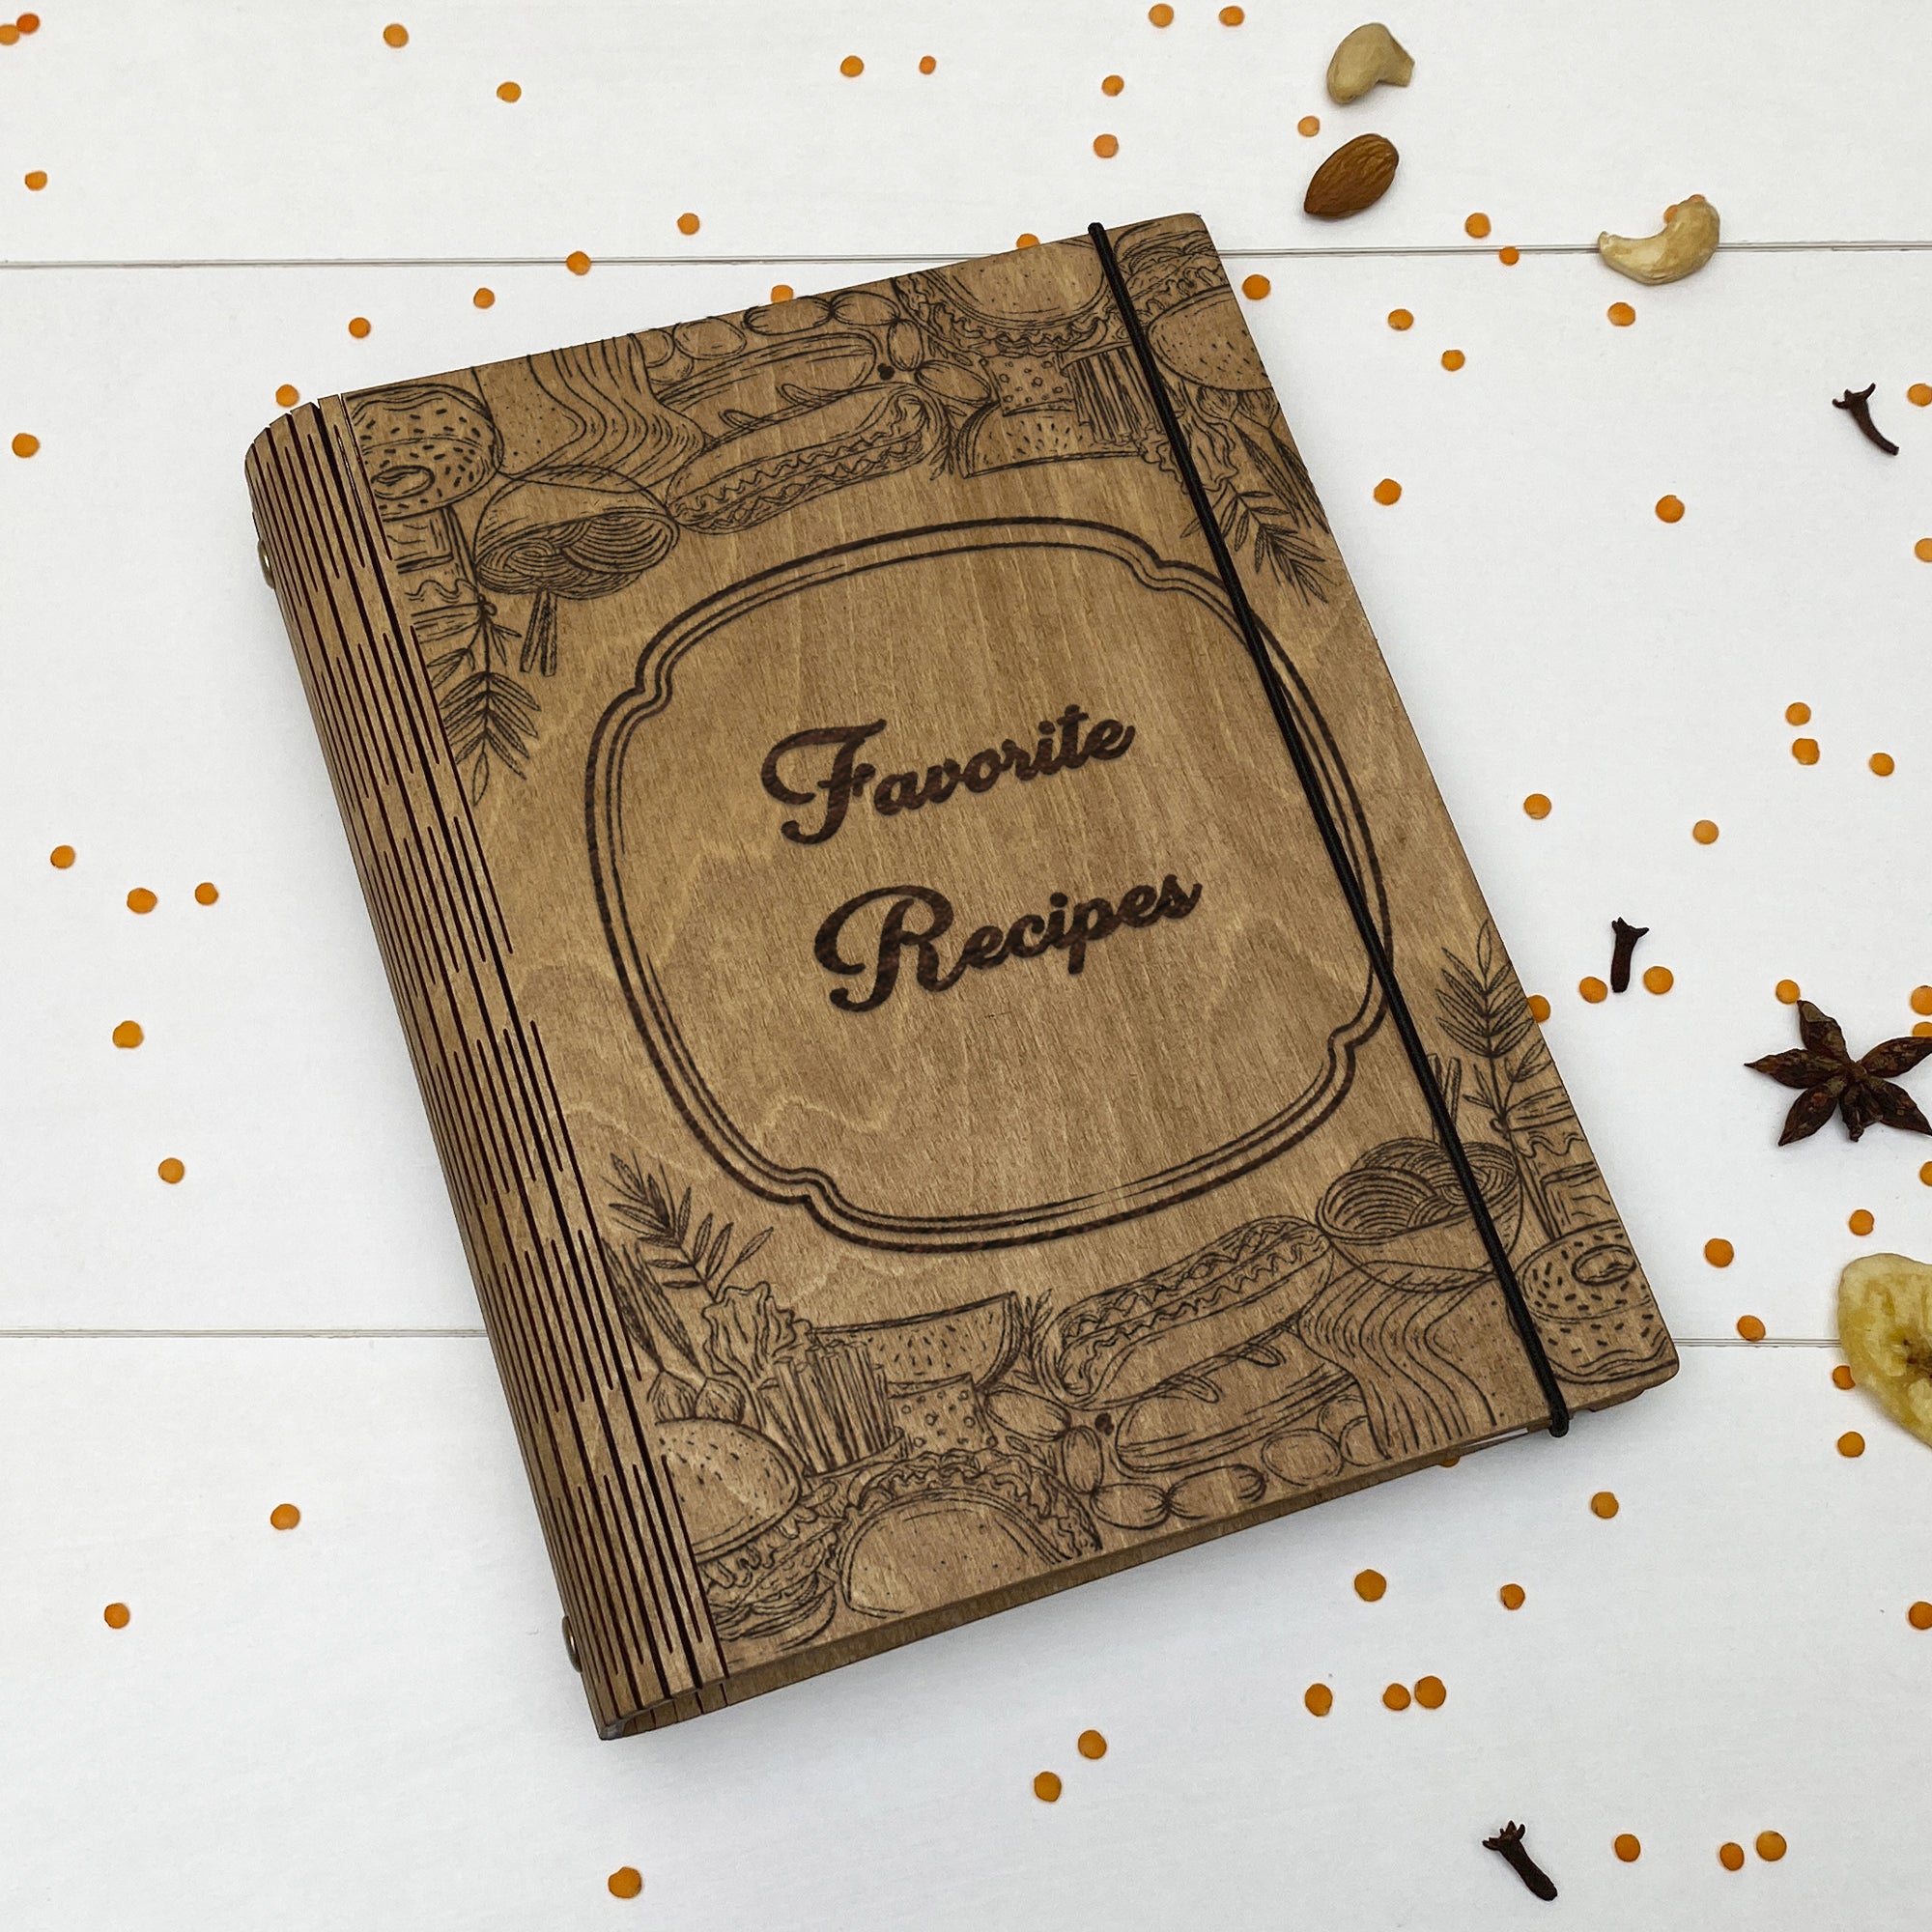 Wooden Favorite Recipes Book Free custom engraving